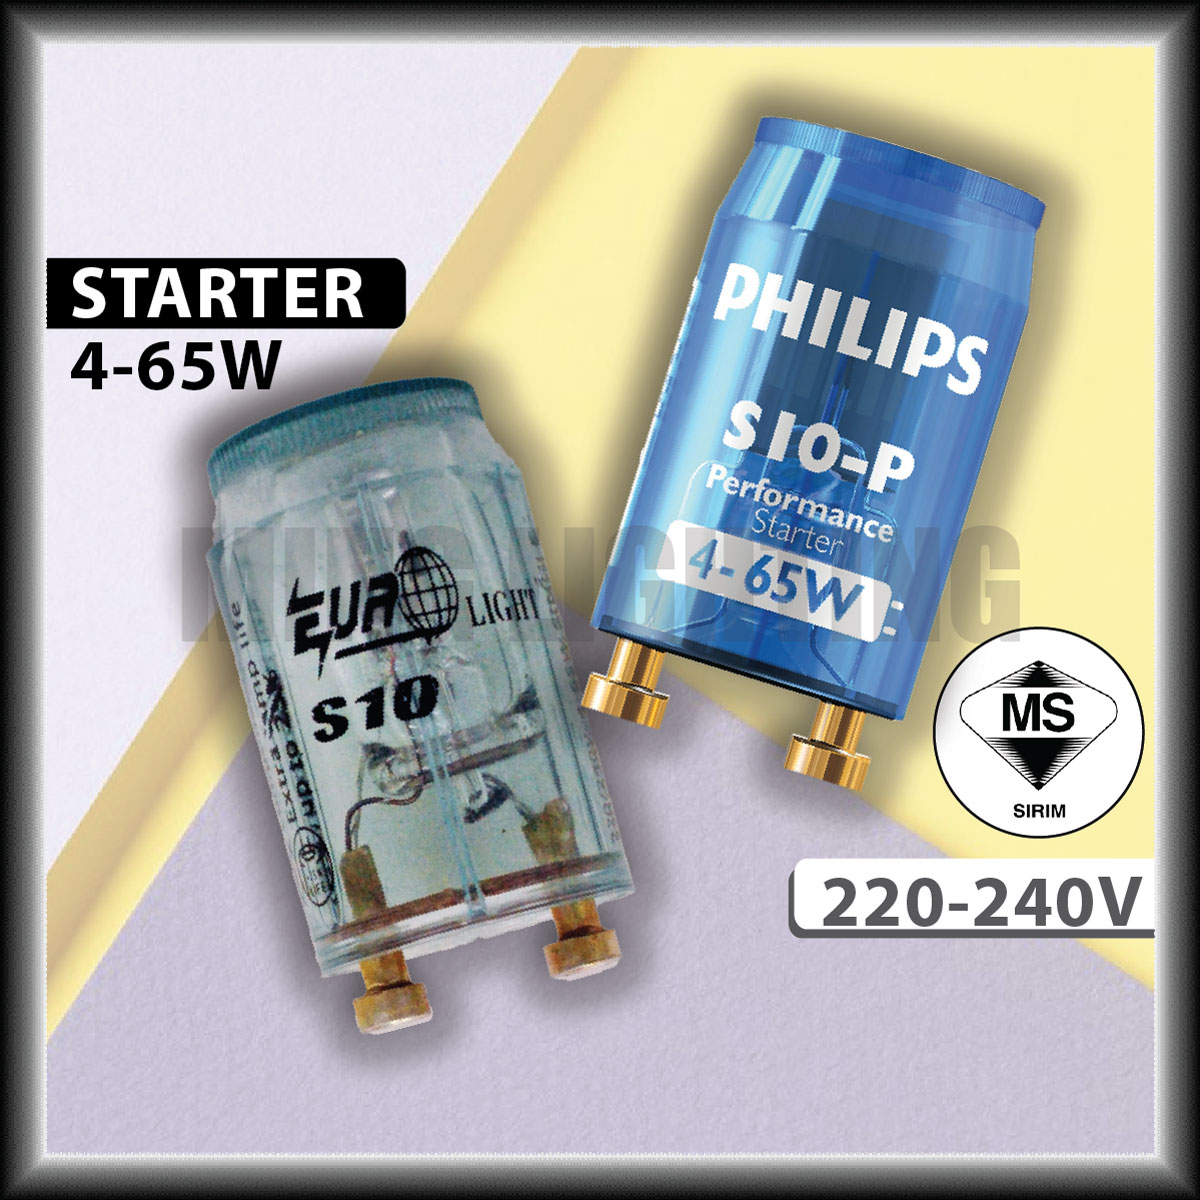 Starter Lampu Philips Eurolight S10 4-65W Fluorescent T8 4ft 2ft Light